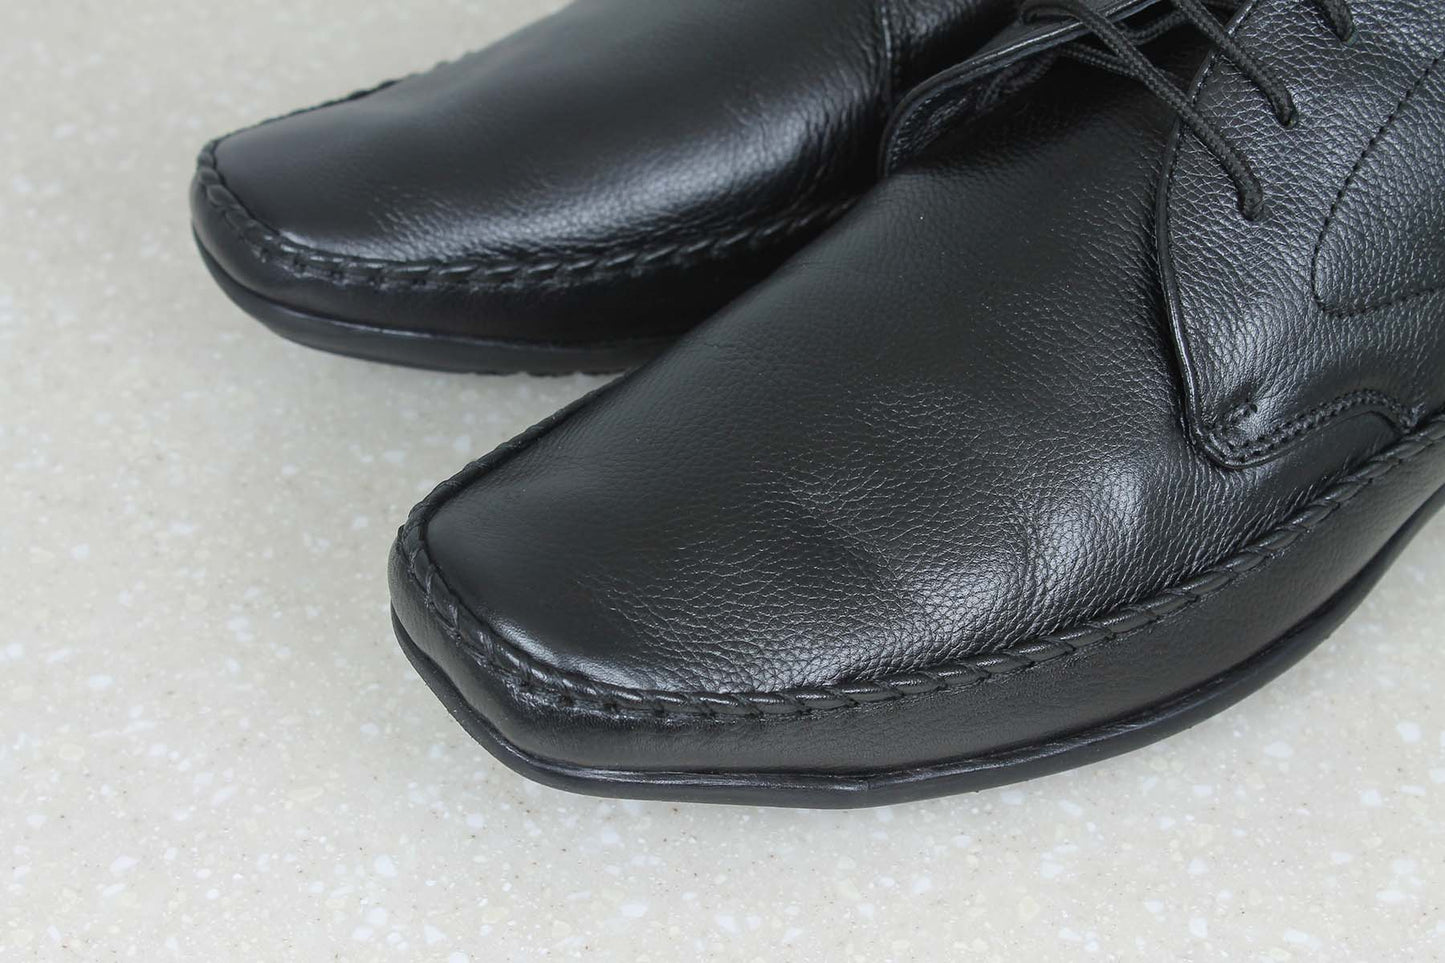 Privo Office Lace-Up Shoe-Black For Men